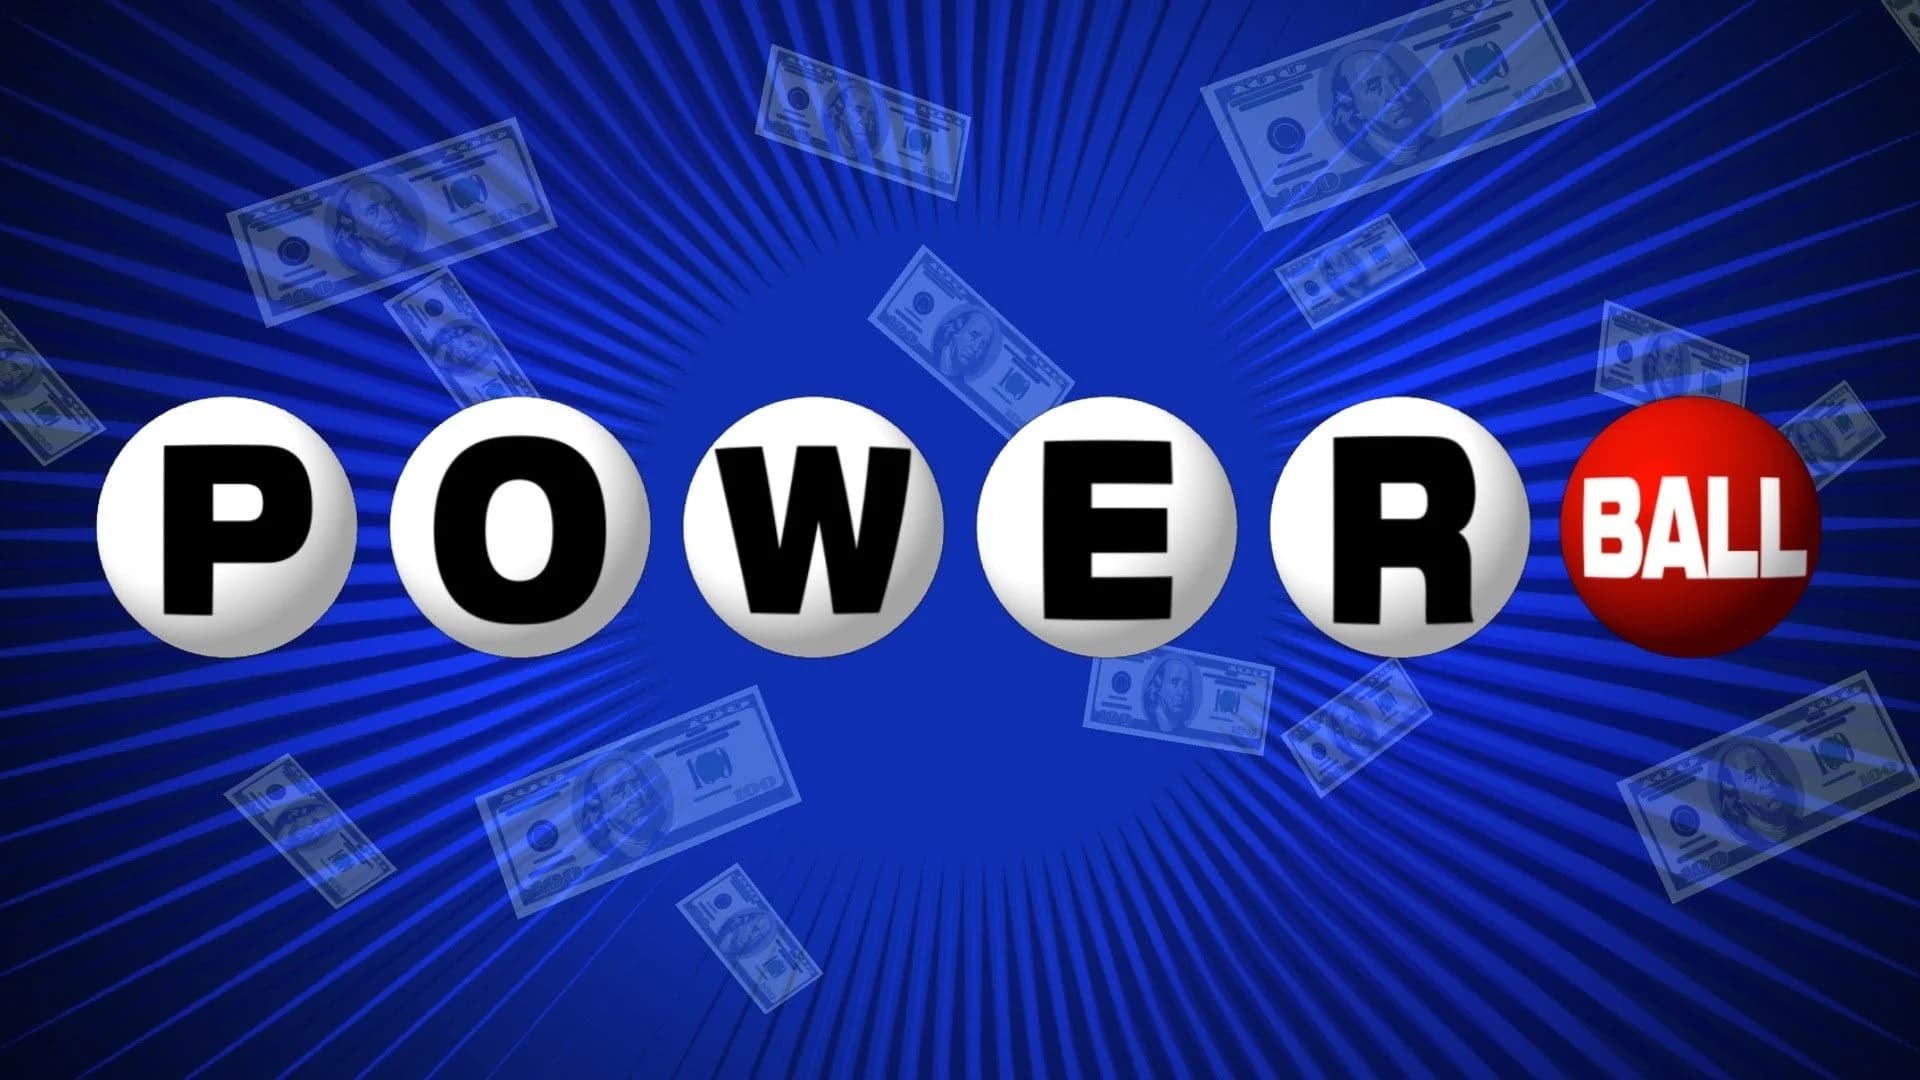 Winning Powerball ticket worth almost $300 million sold in New York City